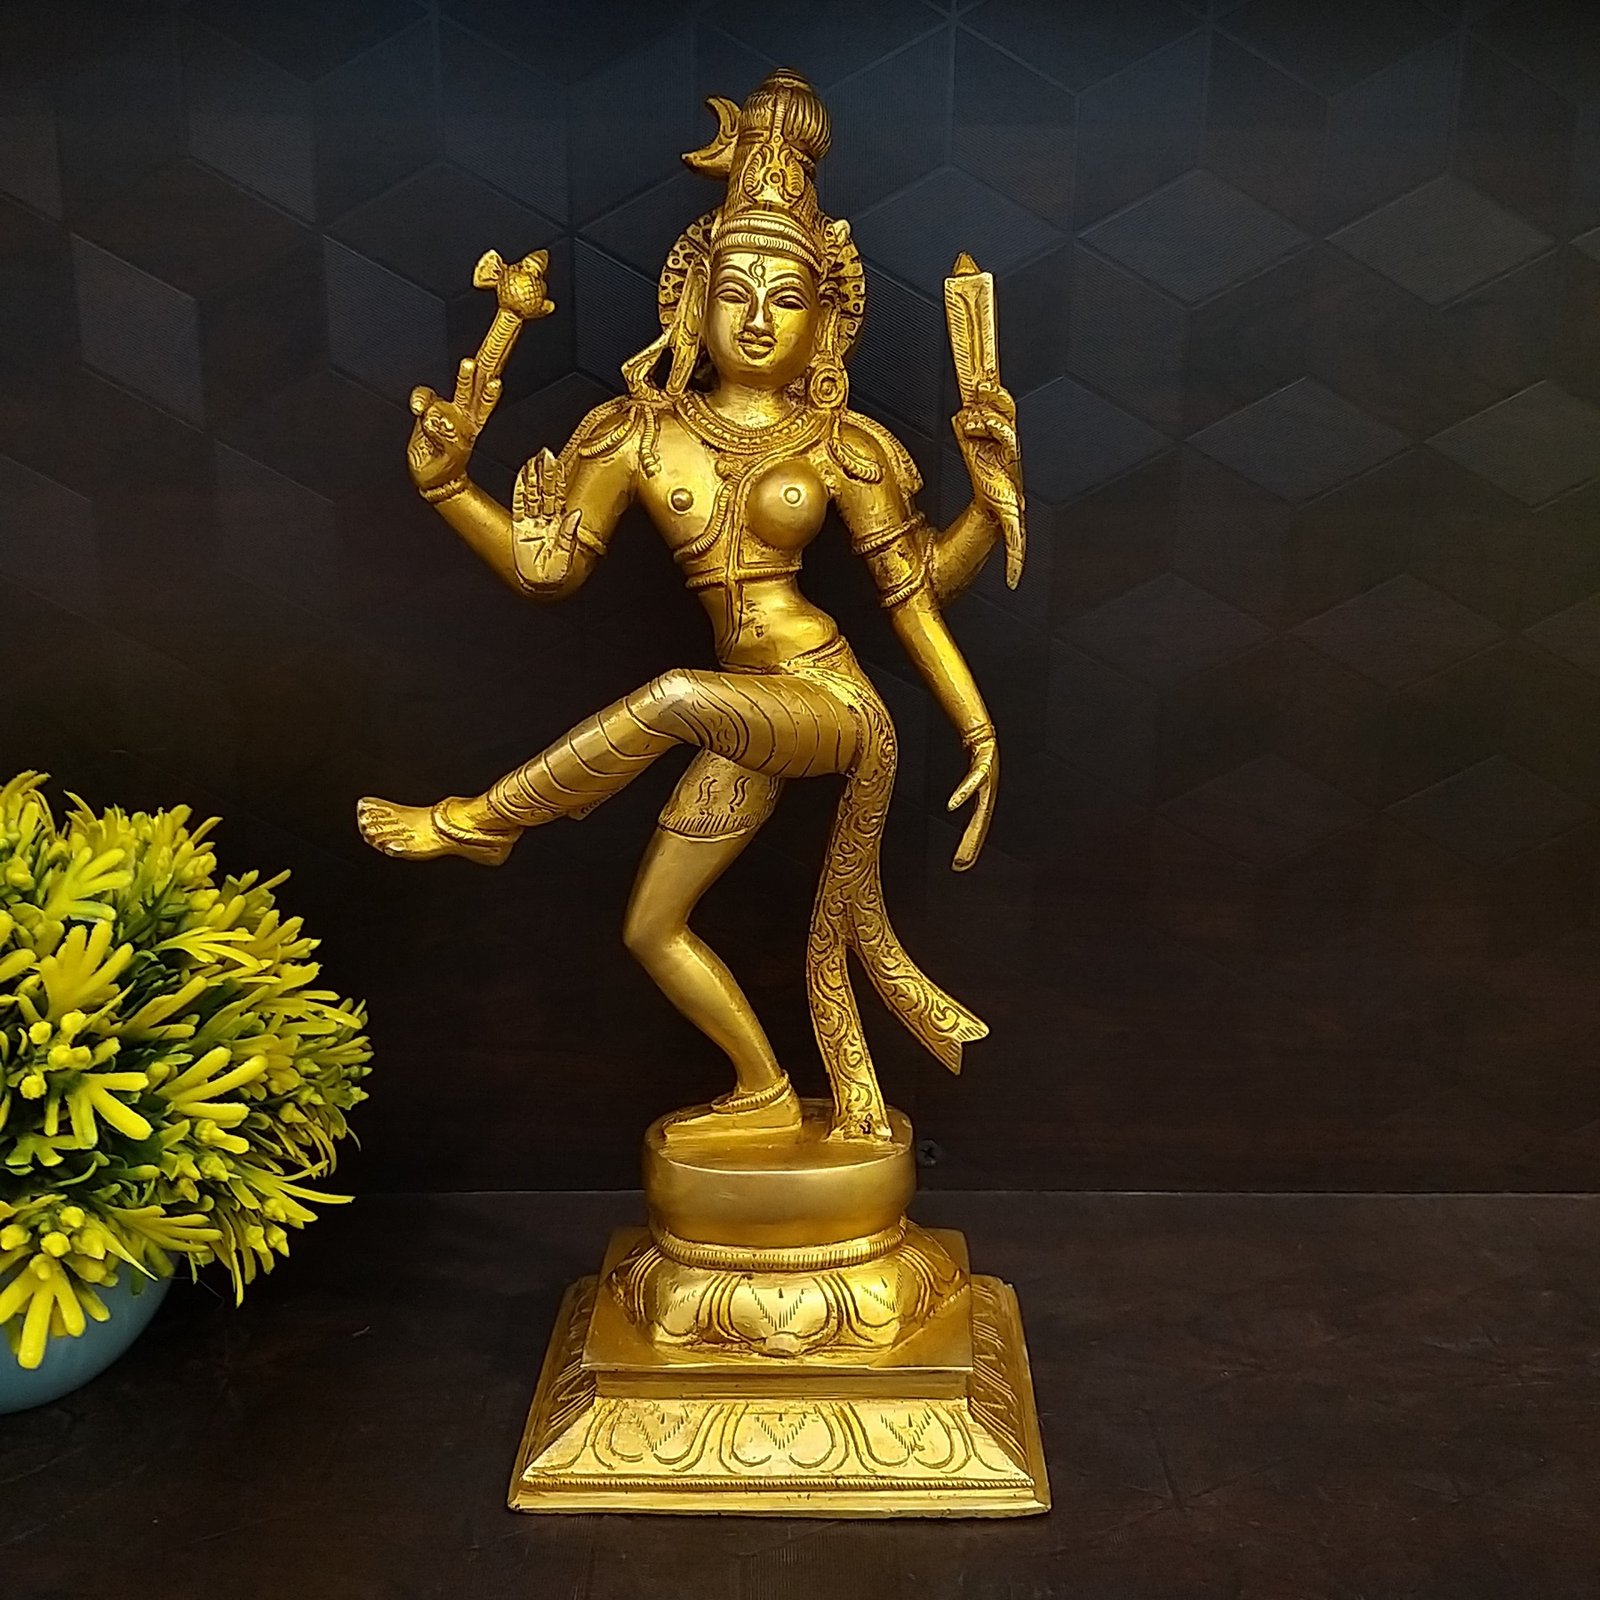 https://vgocart.com/wp-content/uploads/2022/08/brass-arthanatheeswarar-idols-pooja-items-hindu-god-statues-home-decor-gift-buy-online-india-3.jpg